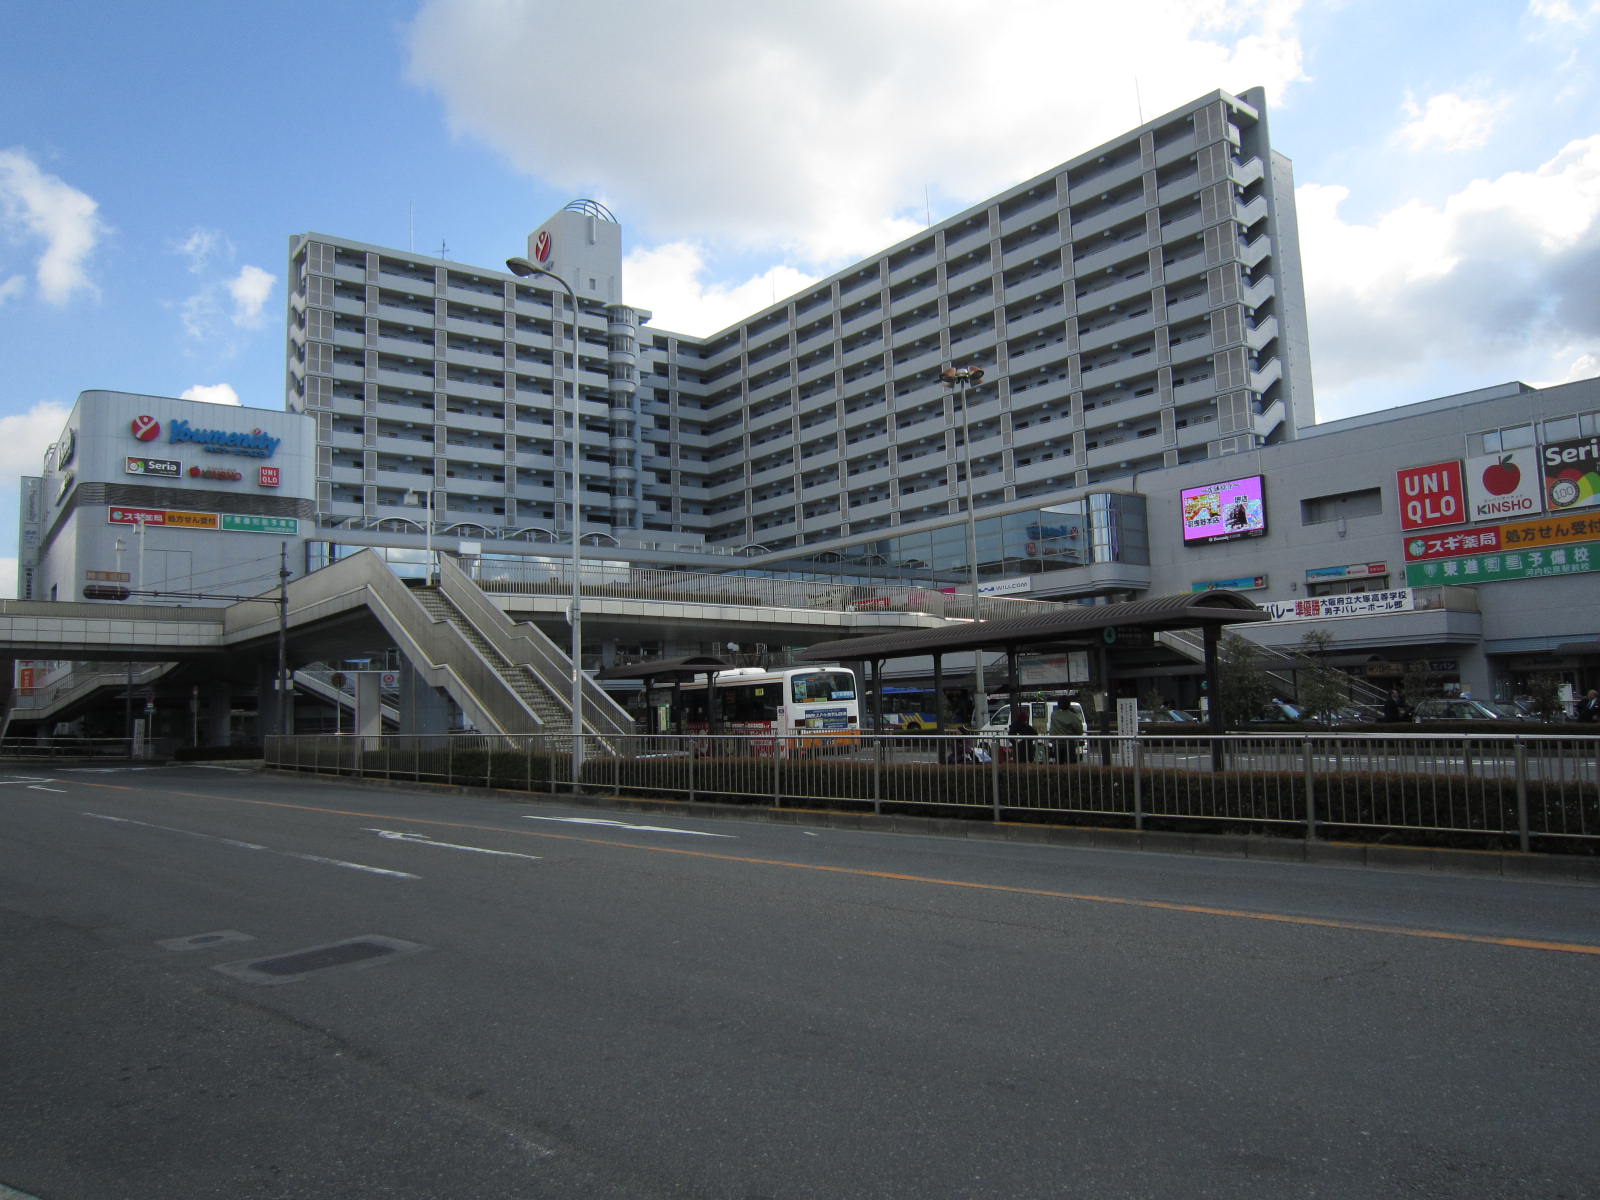 Shopping centre. Dream 1458m until sanity Matsubara (shopping center)